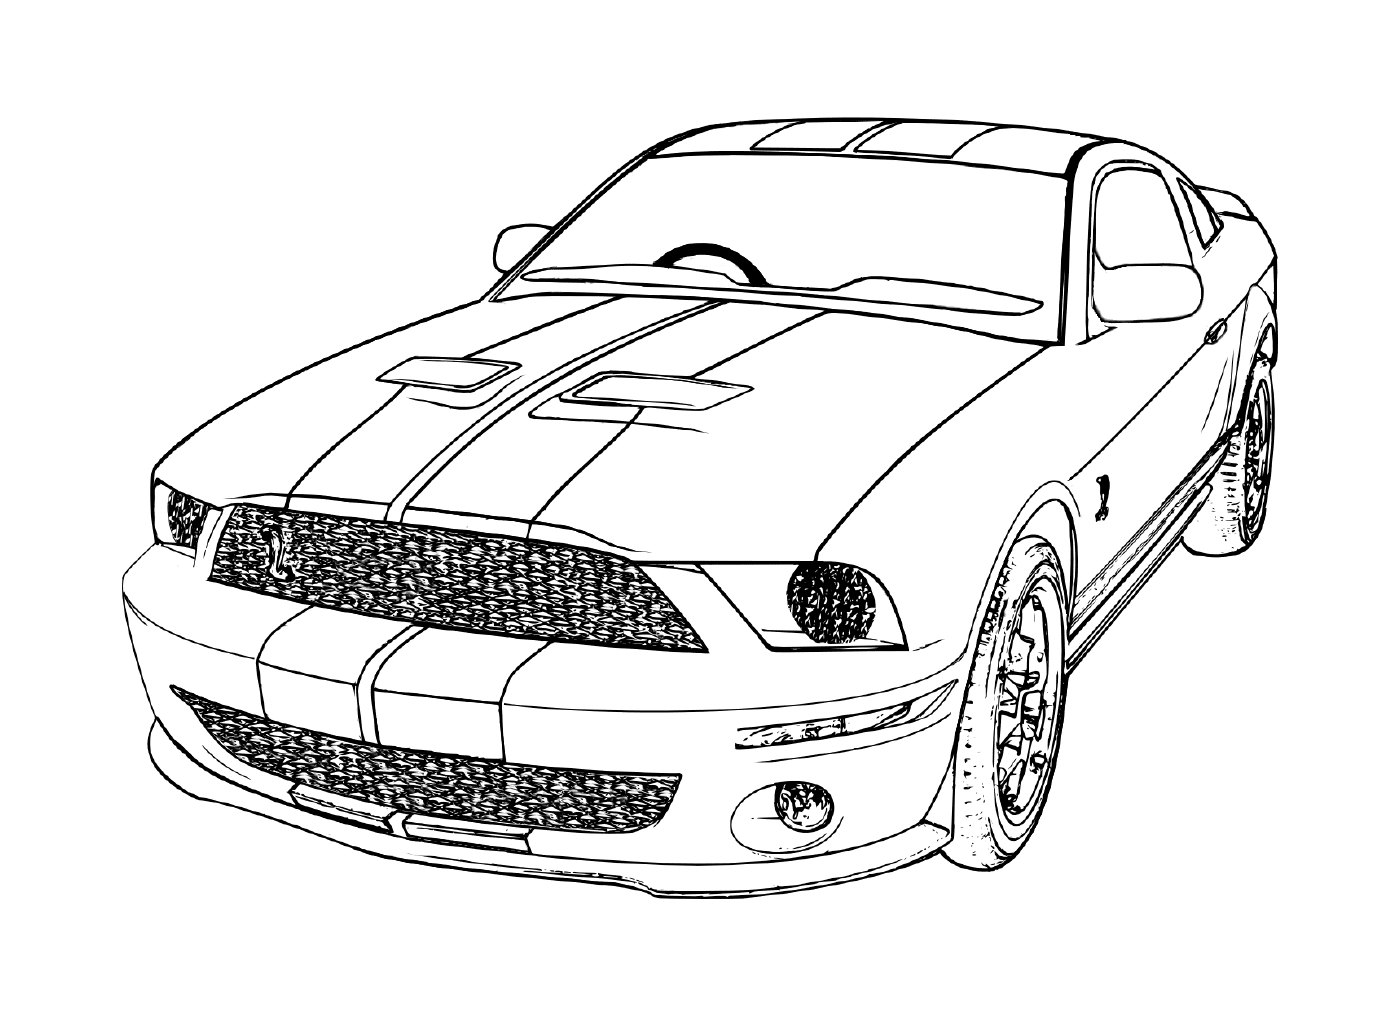  Ford Mustang coche de carreras 